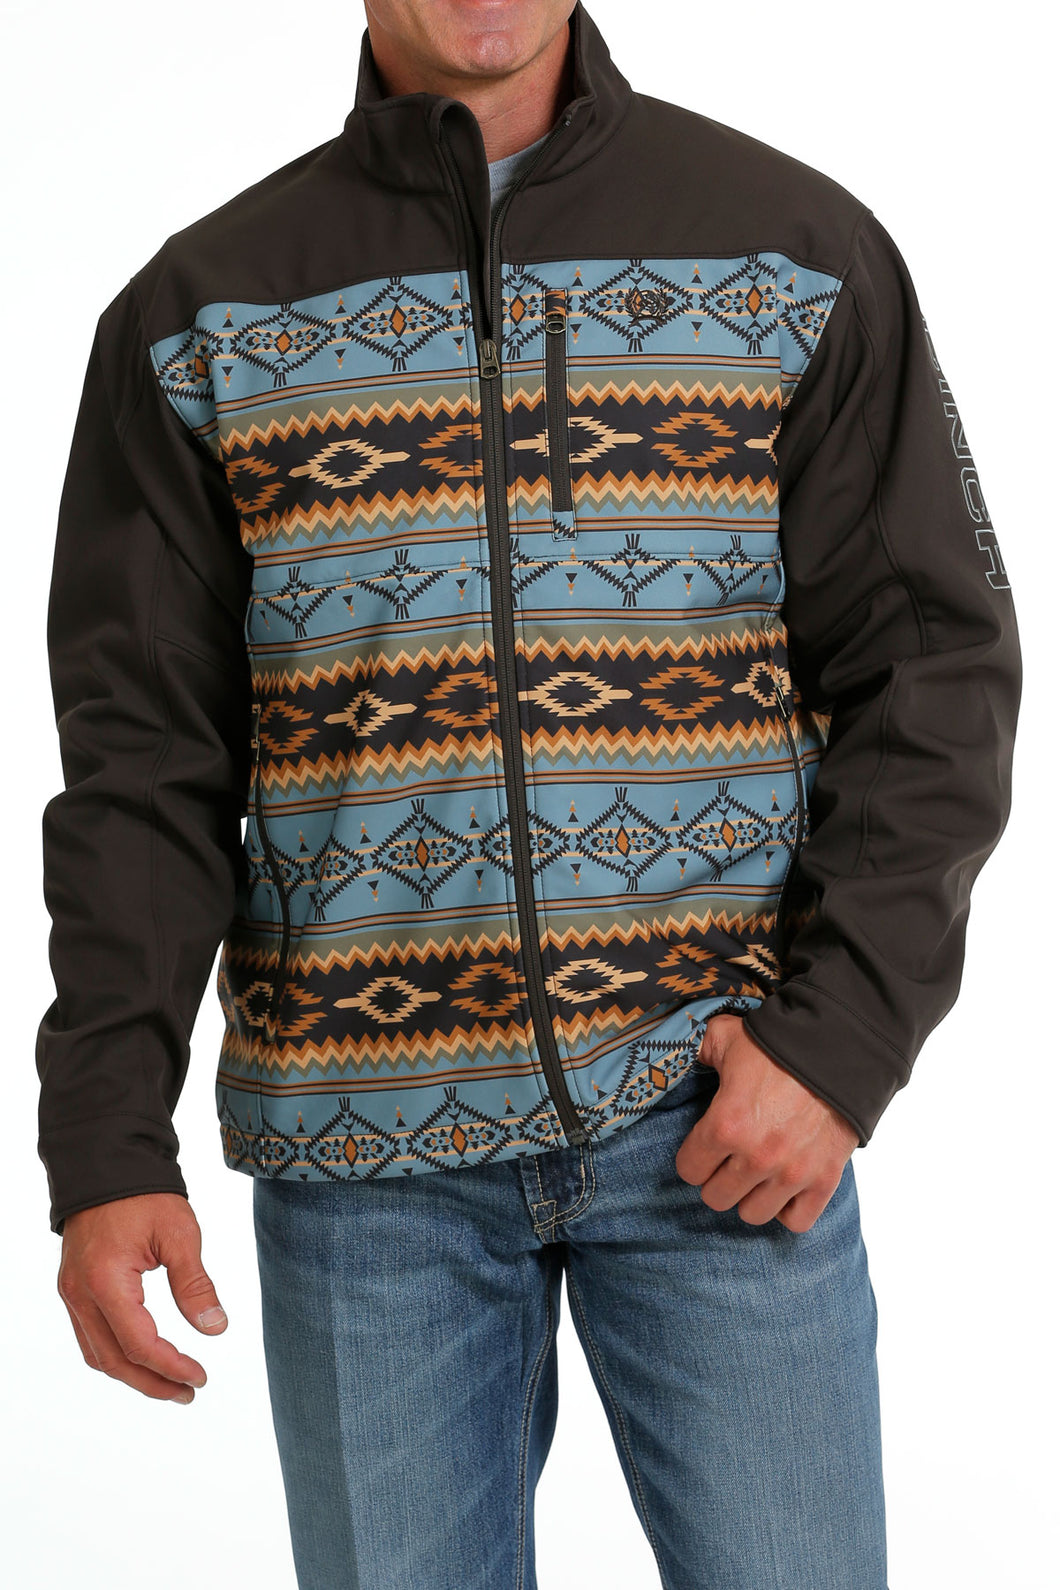 Pard's Western Shop Cinch Men's Brown/Blue Aztec Print Bonded Jacket